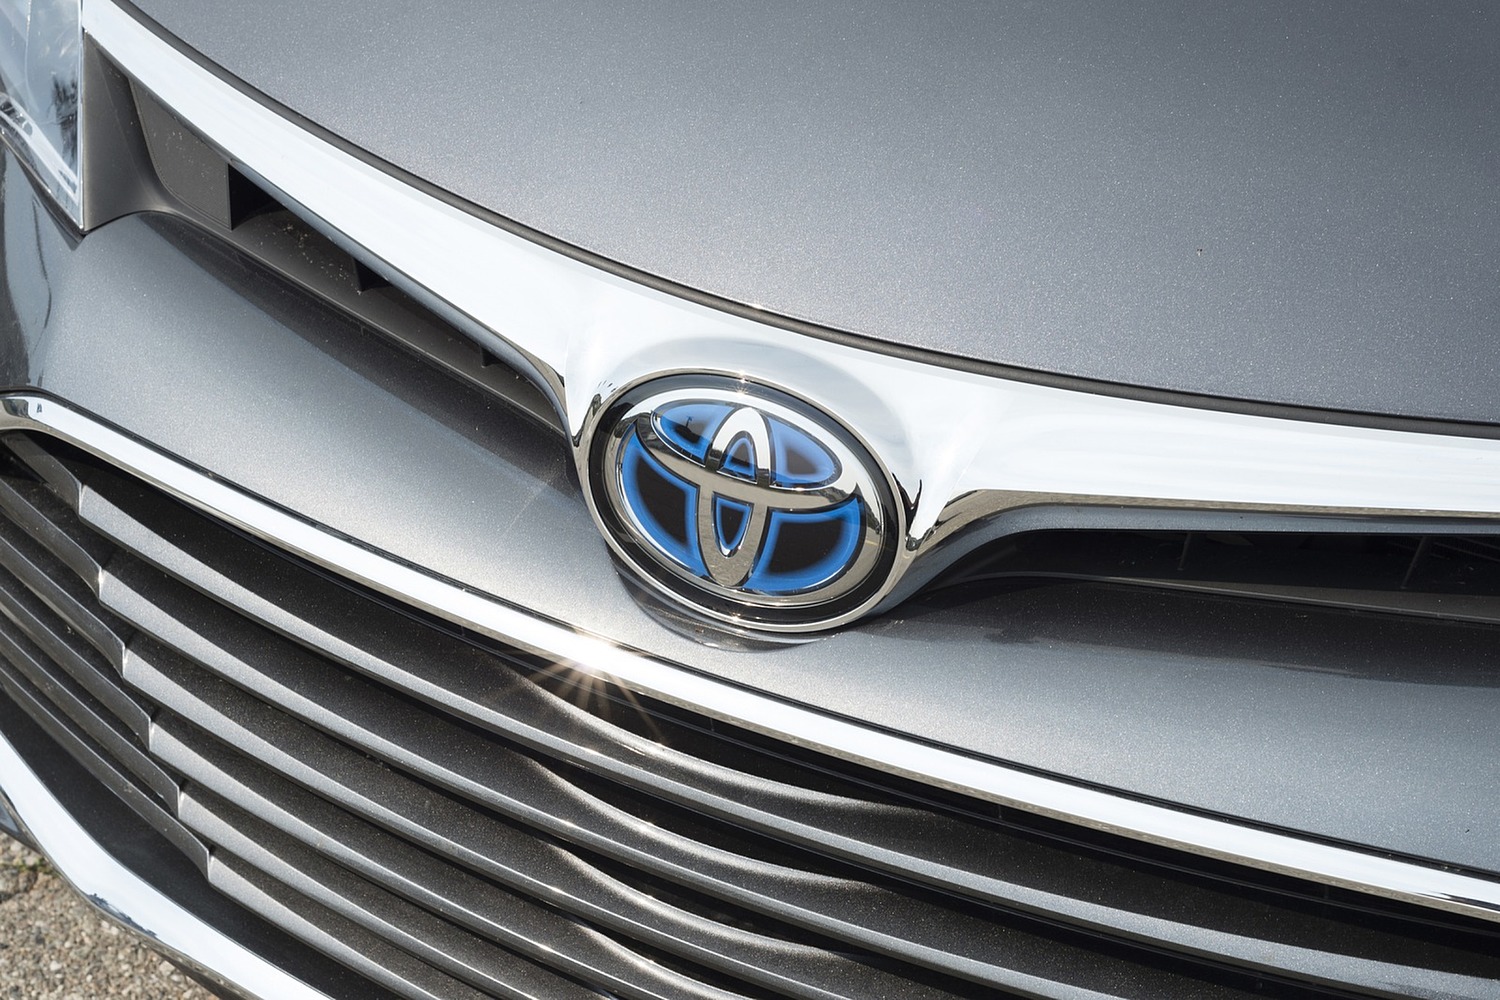 Toyota Avalon Hybrid Sedan Front Badge (2017 model year shown)